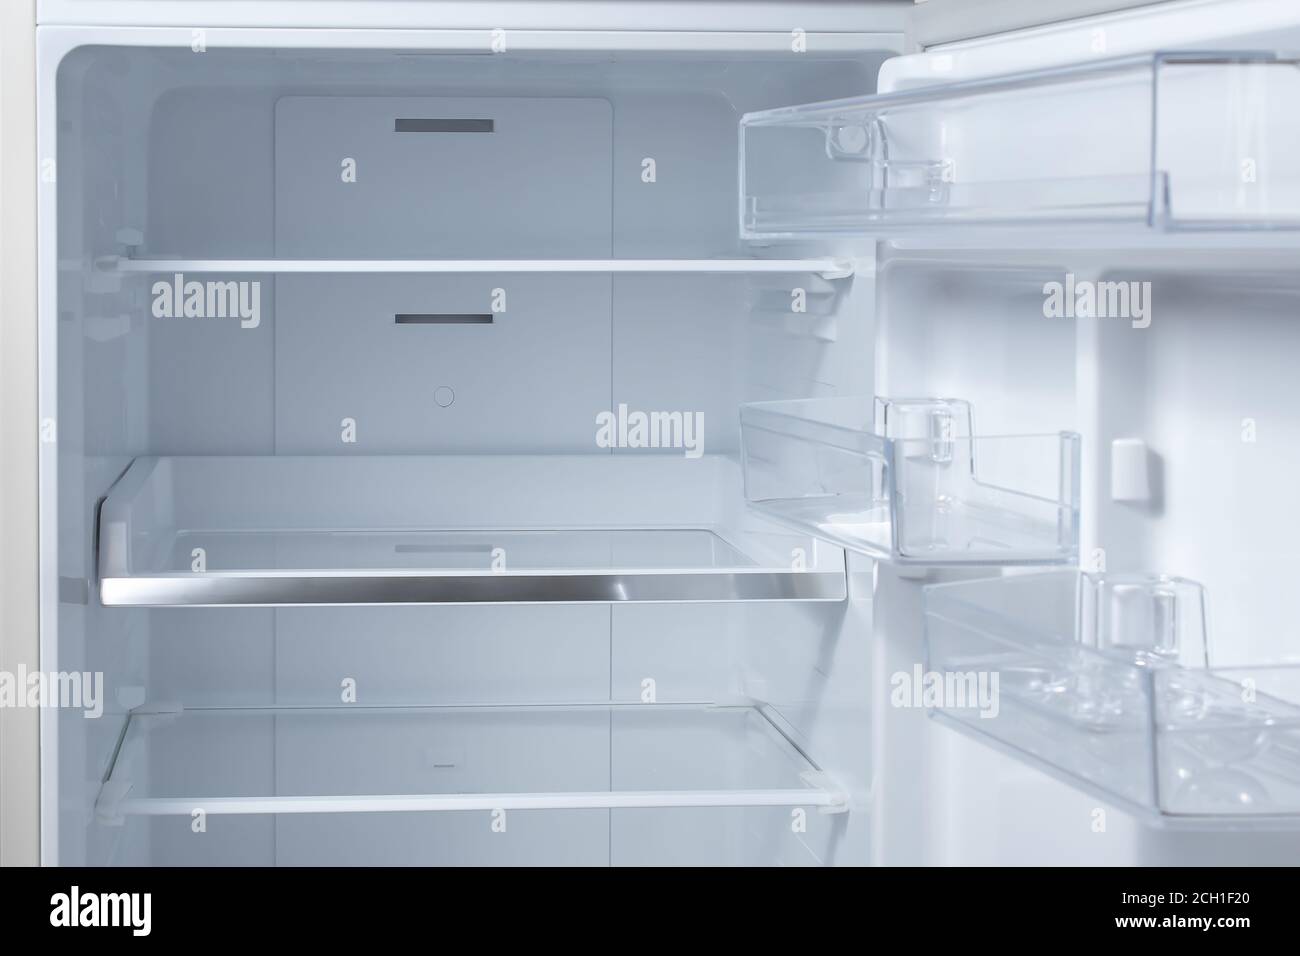 Leerer Kühlschrank geöffnet. Kühlschrank öffnen leeren Kühlschrank im Inneren. Nahaufnahme auf leeren Kühlschrank mit Tür geöffnet. Neuer, sauberer Kühlschrank. Stockfoto